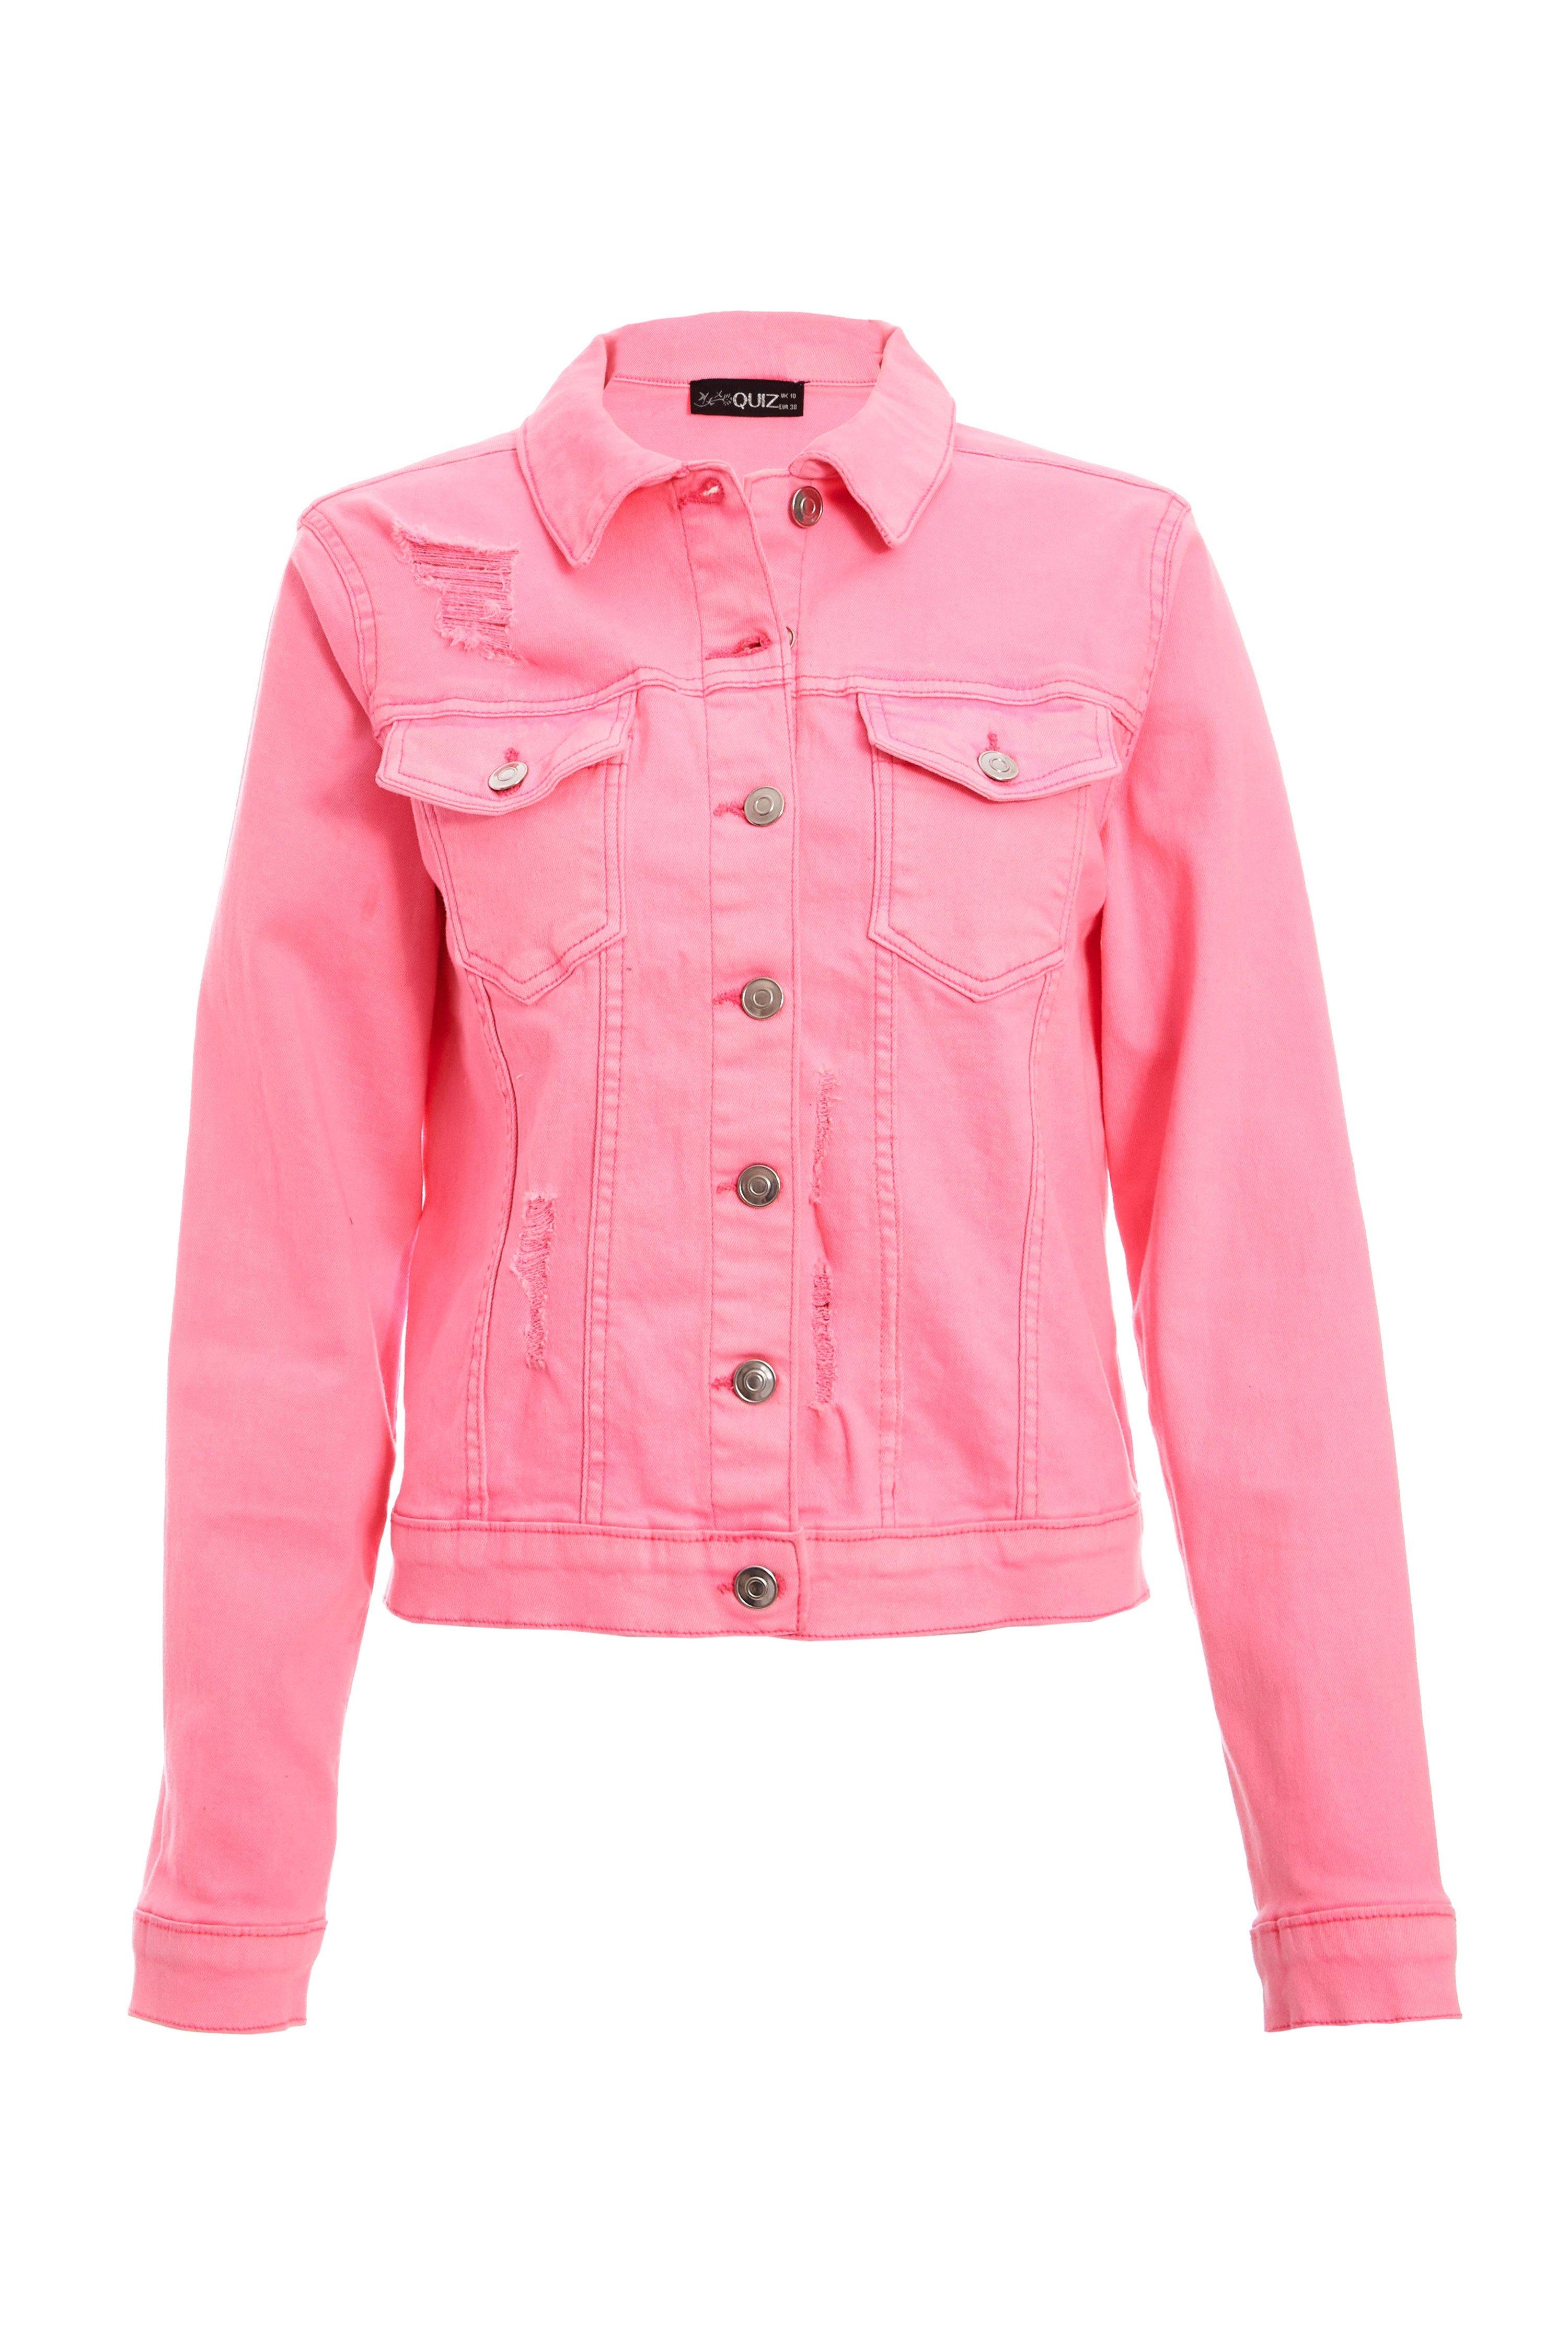 Neon Pink Denim Ripped Jacket - Quiz Clothing